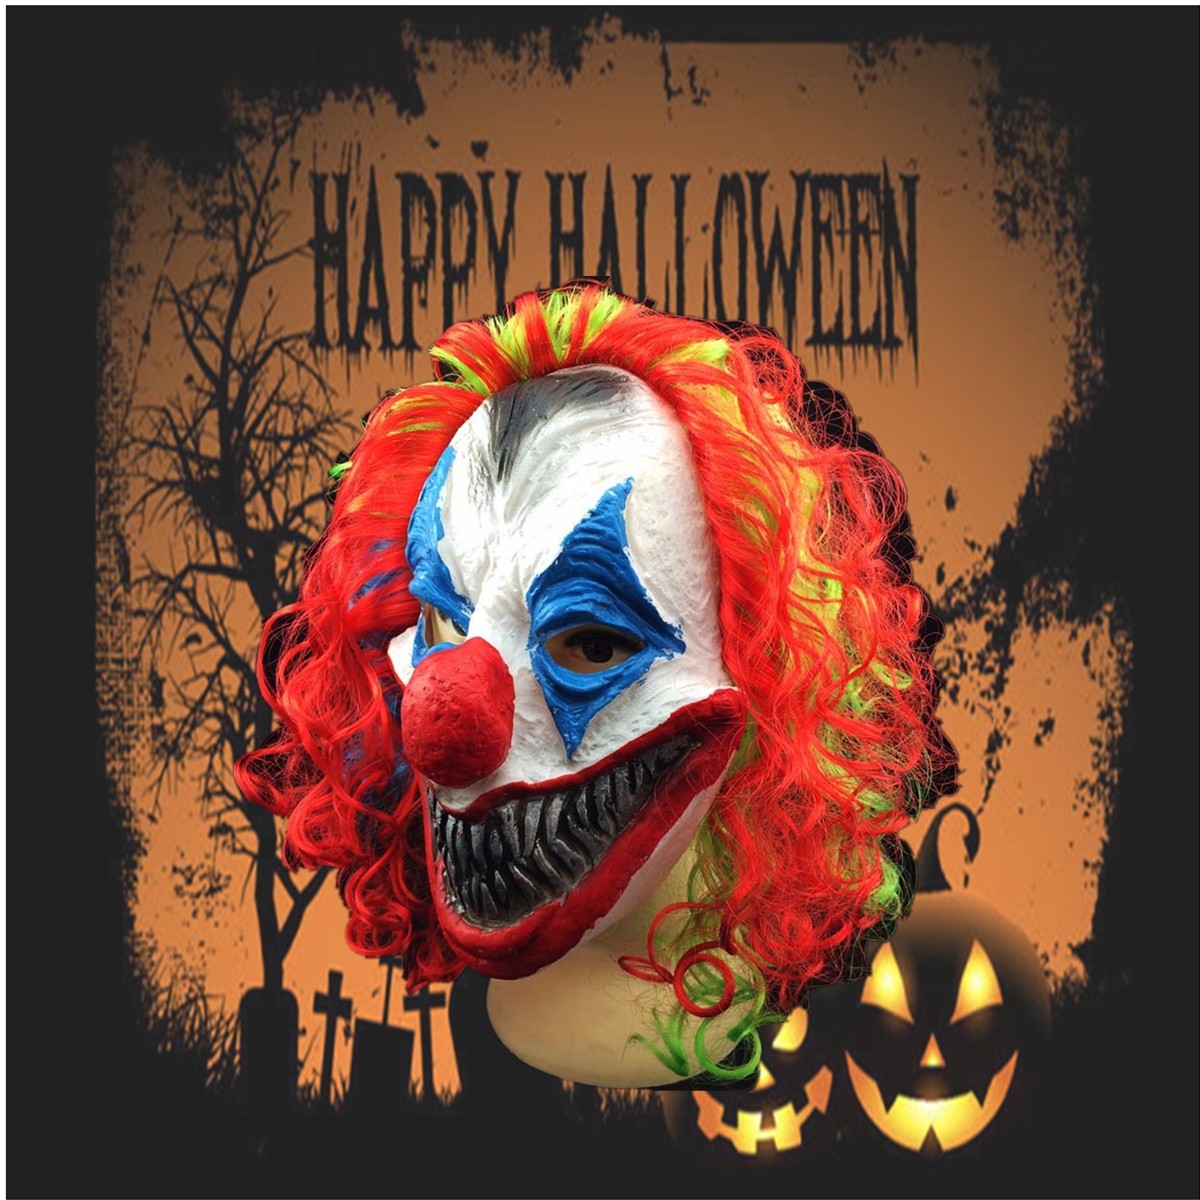 New Halloween Mask Creepy Clown Head Adult Costume Party Fancy Prop Random Colo